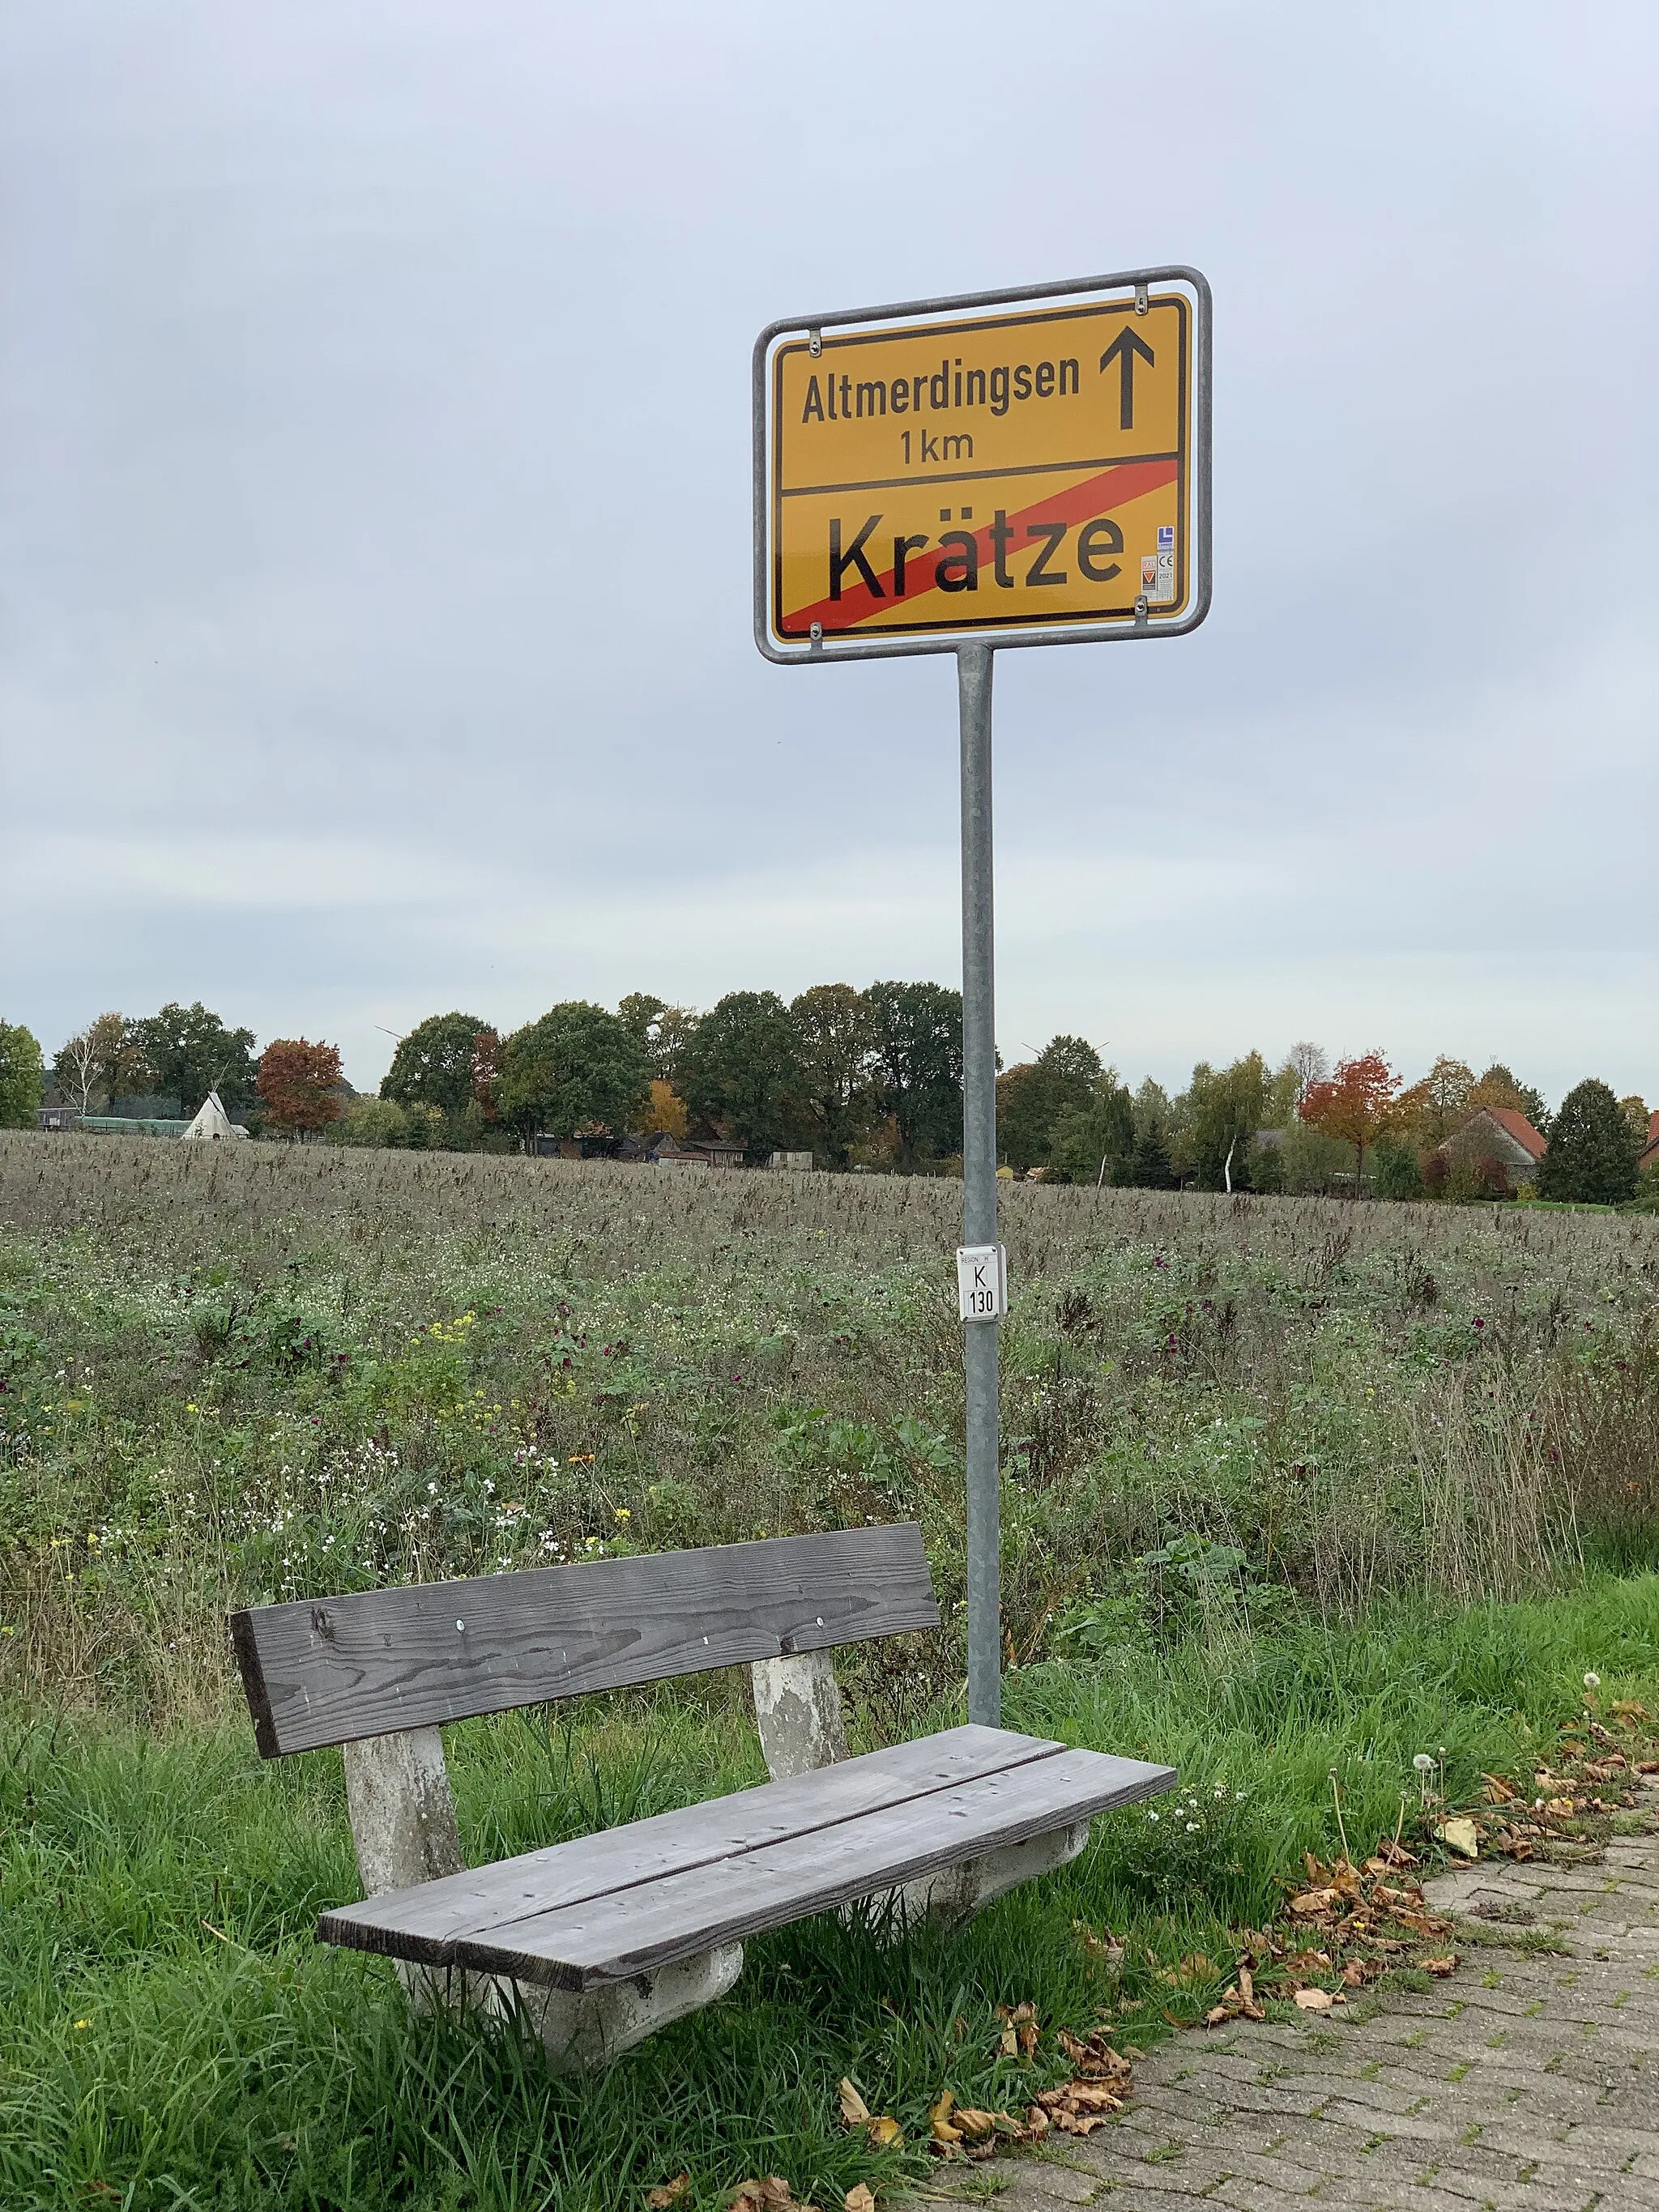 Photo showing: A leaving village sign of Krätze showing the 1km distance to Altmerdingsen